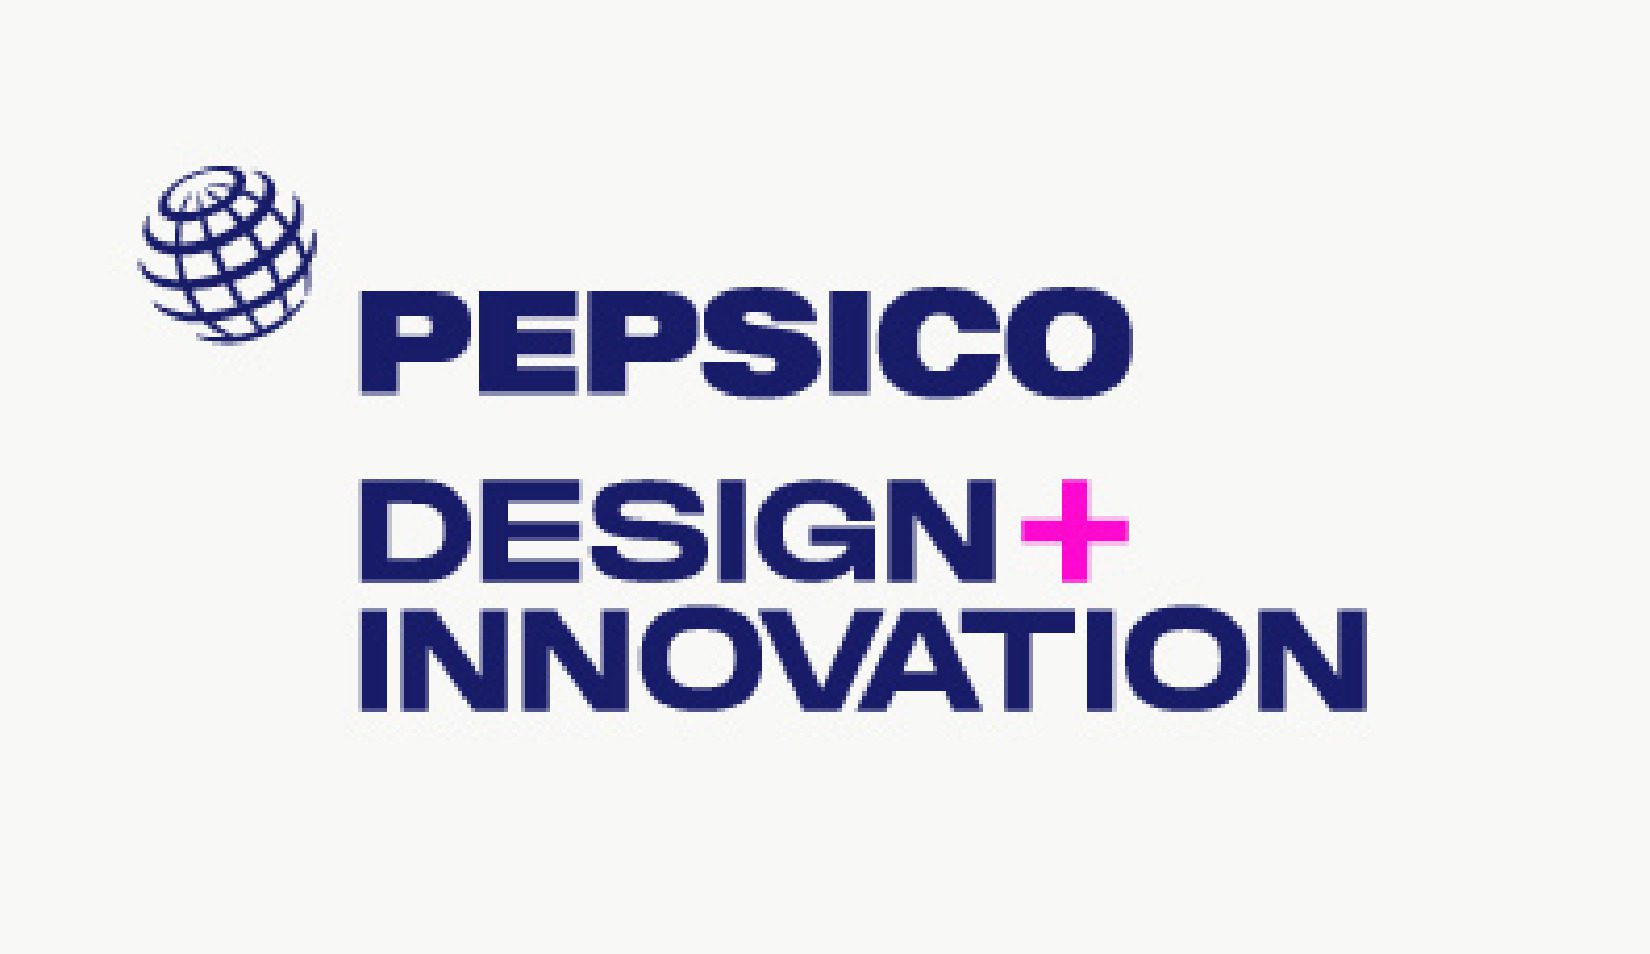 The PepsiCo Design & Innovation ‘Unicorn’ Award